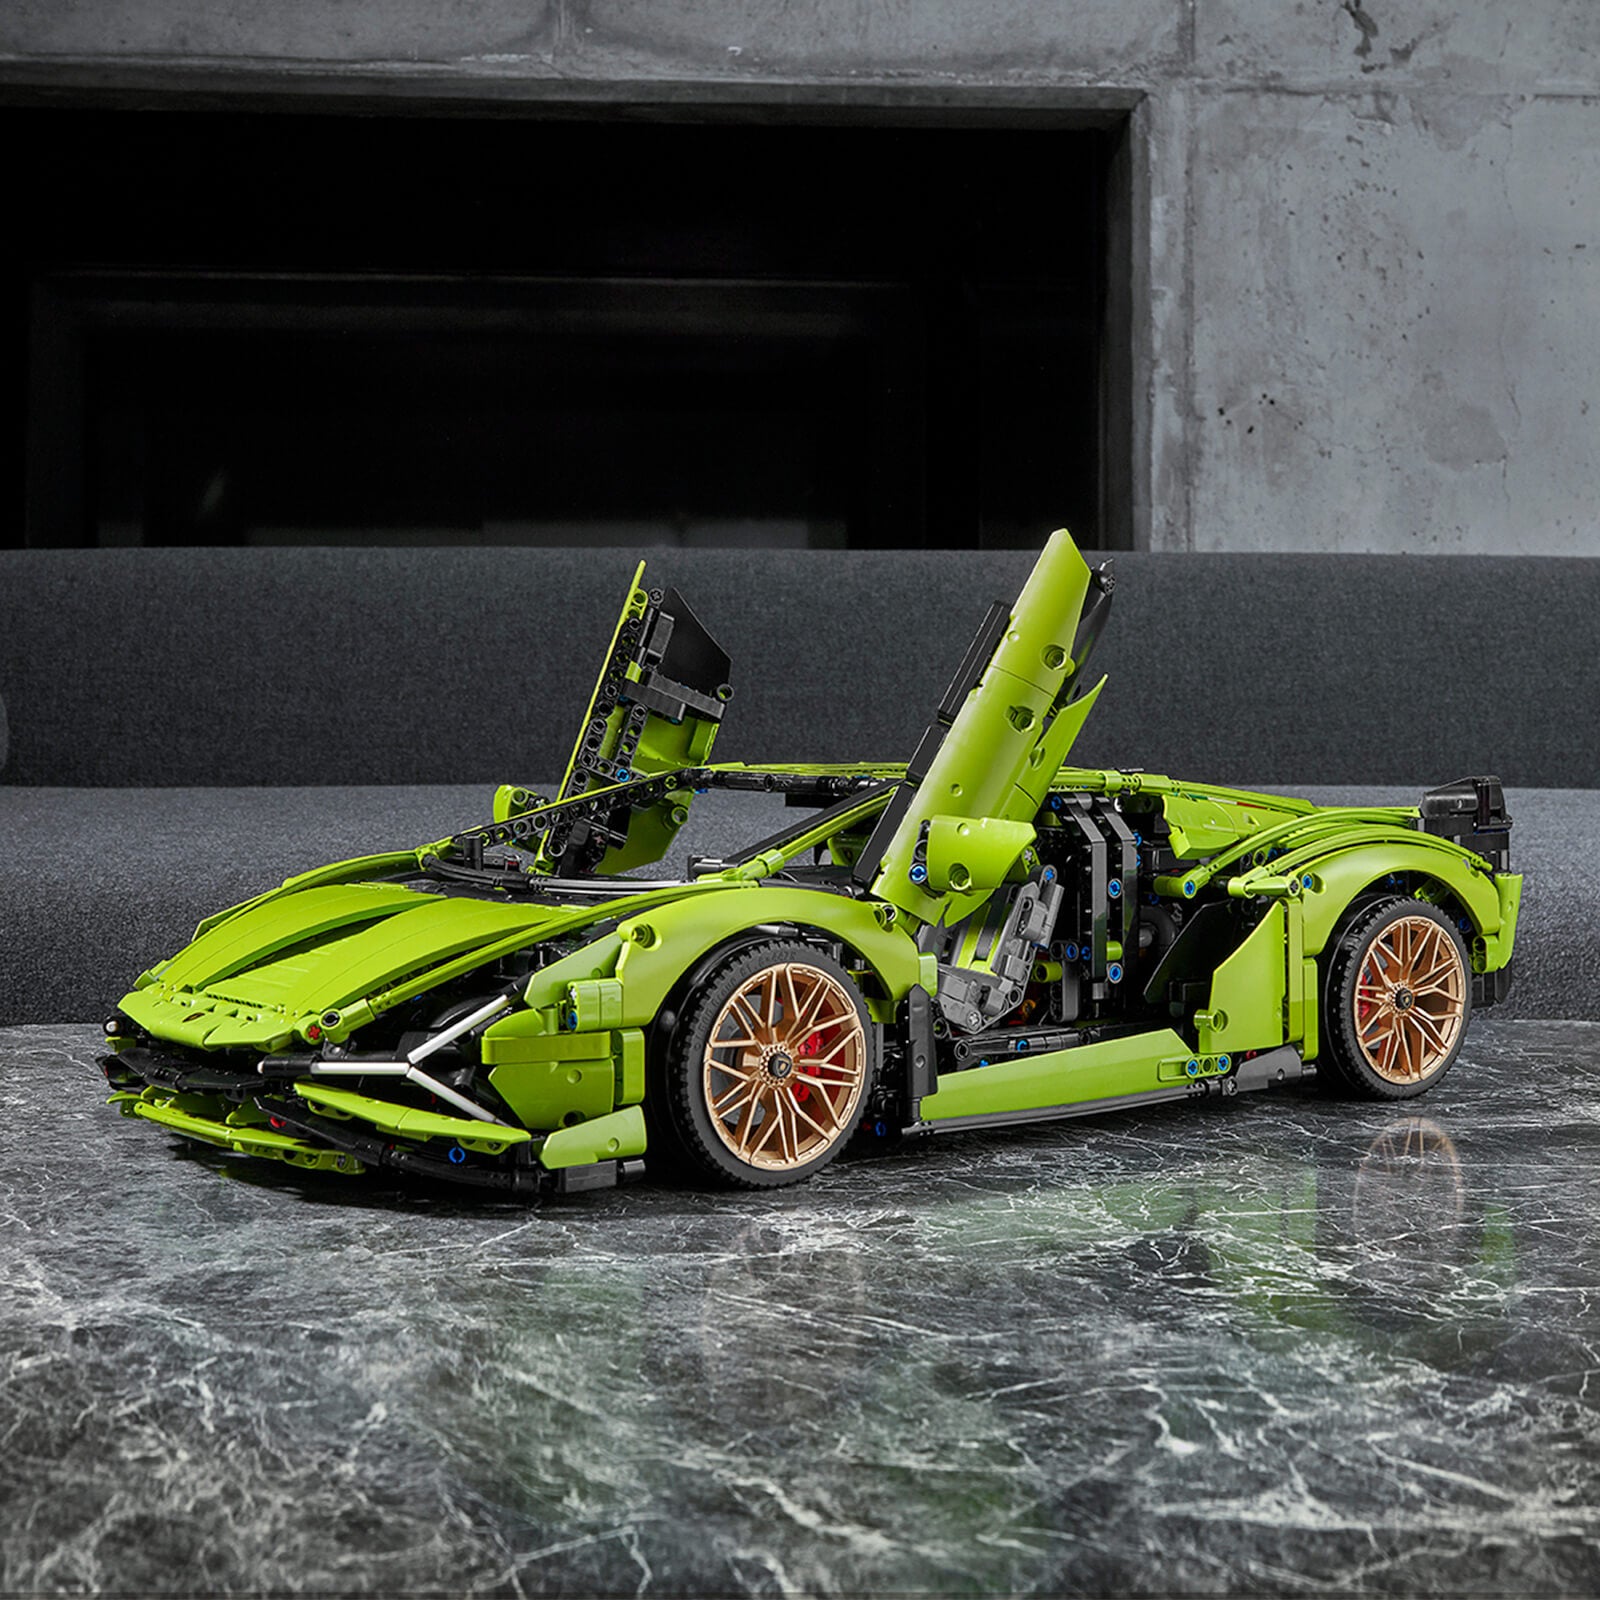 Lego Lamborghini Sián FKP 37 - 42115 Green